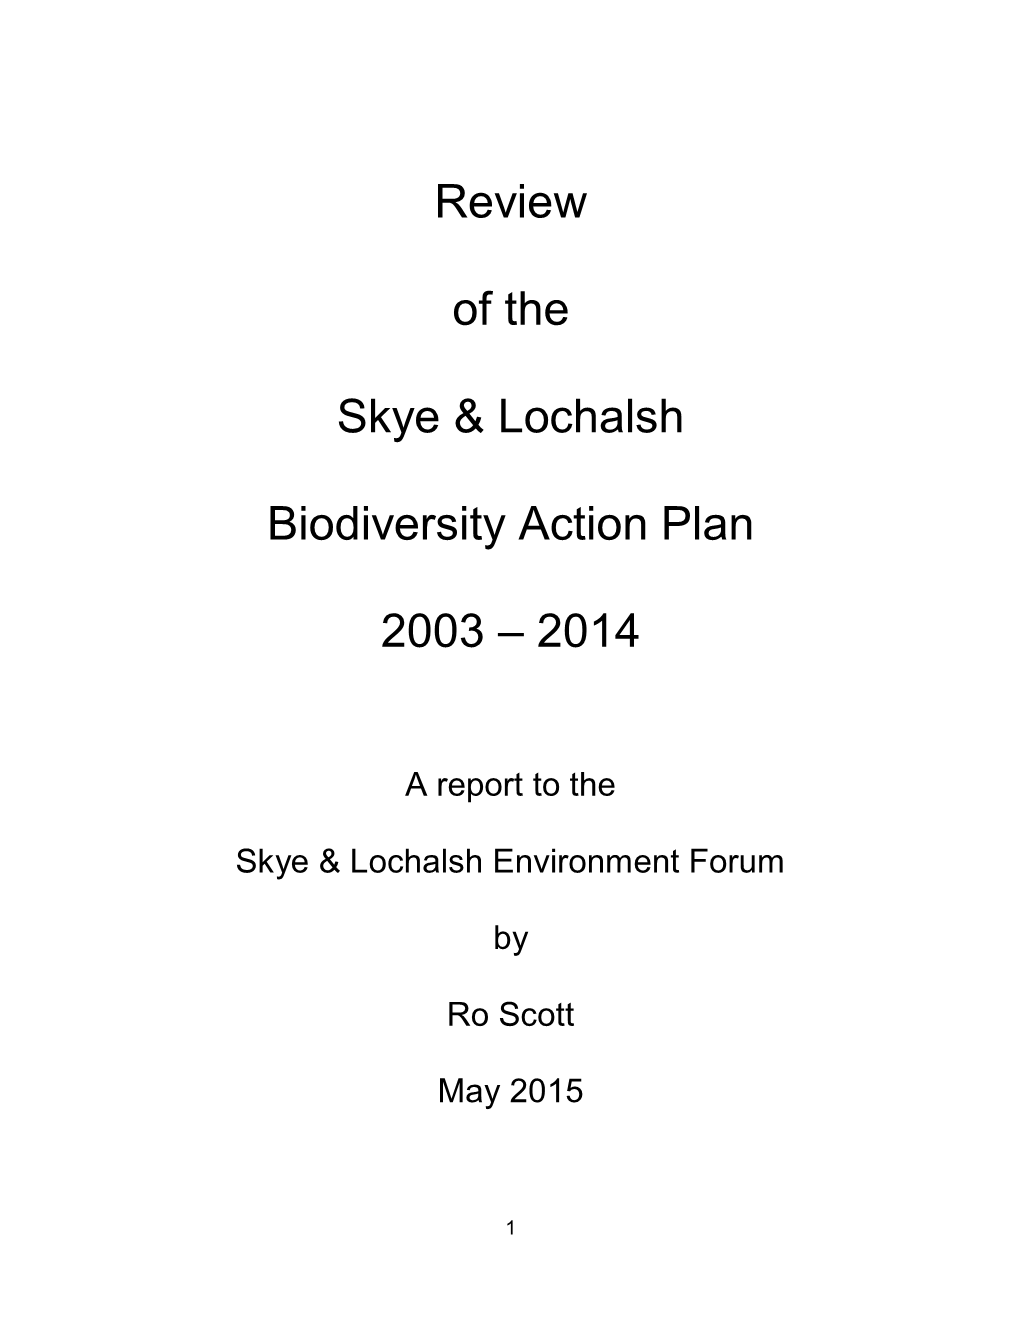 Review of the Skye & Lochalsh Biodiversity Action Plan 2003 – 2014